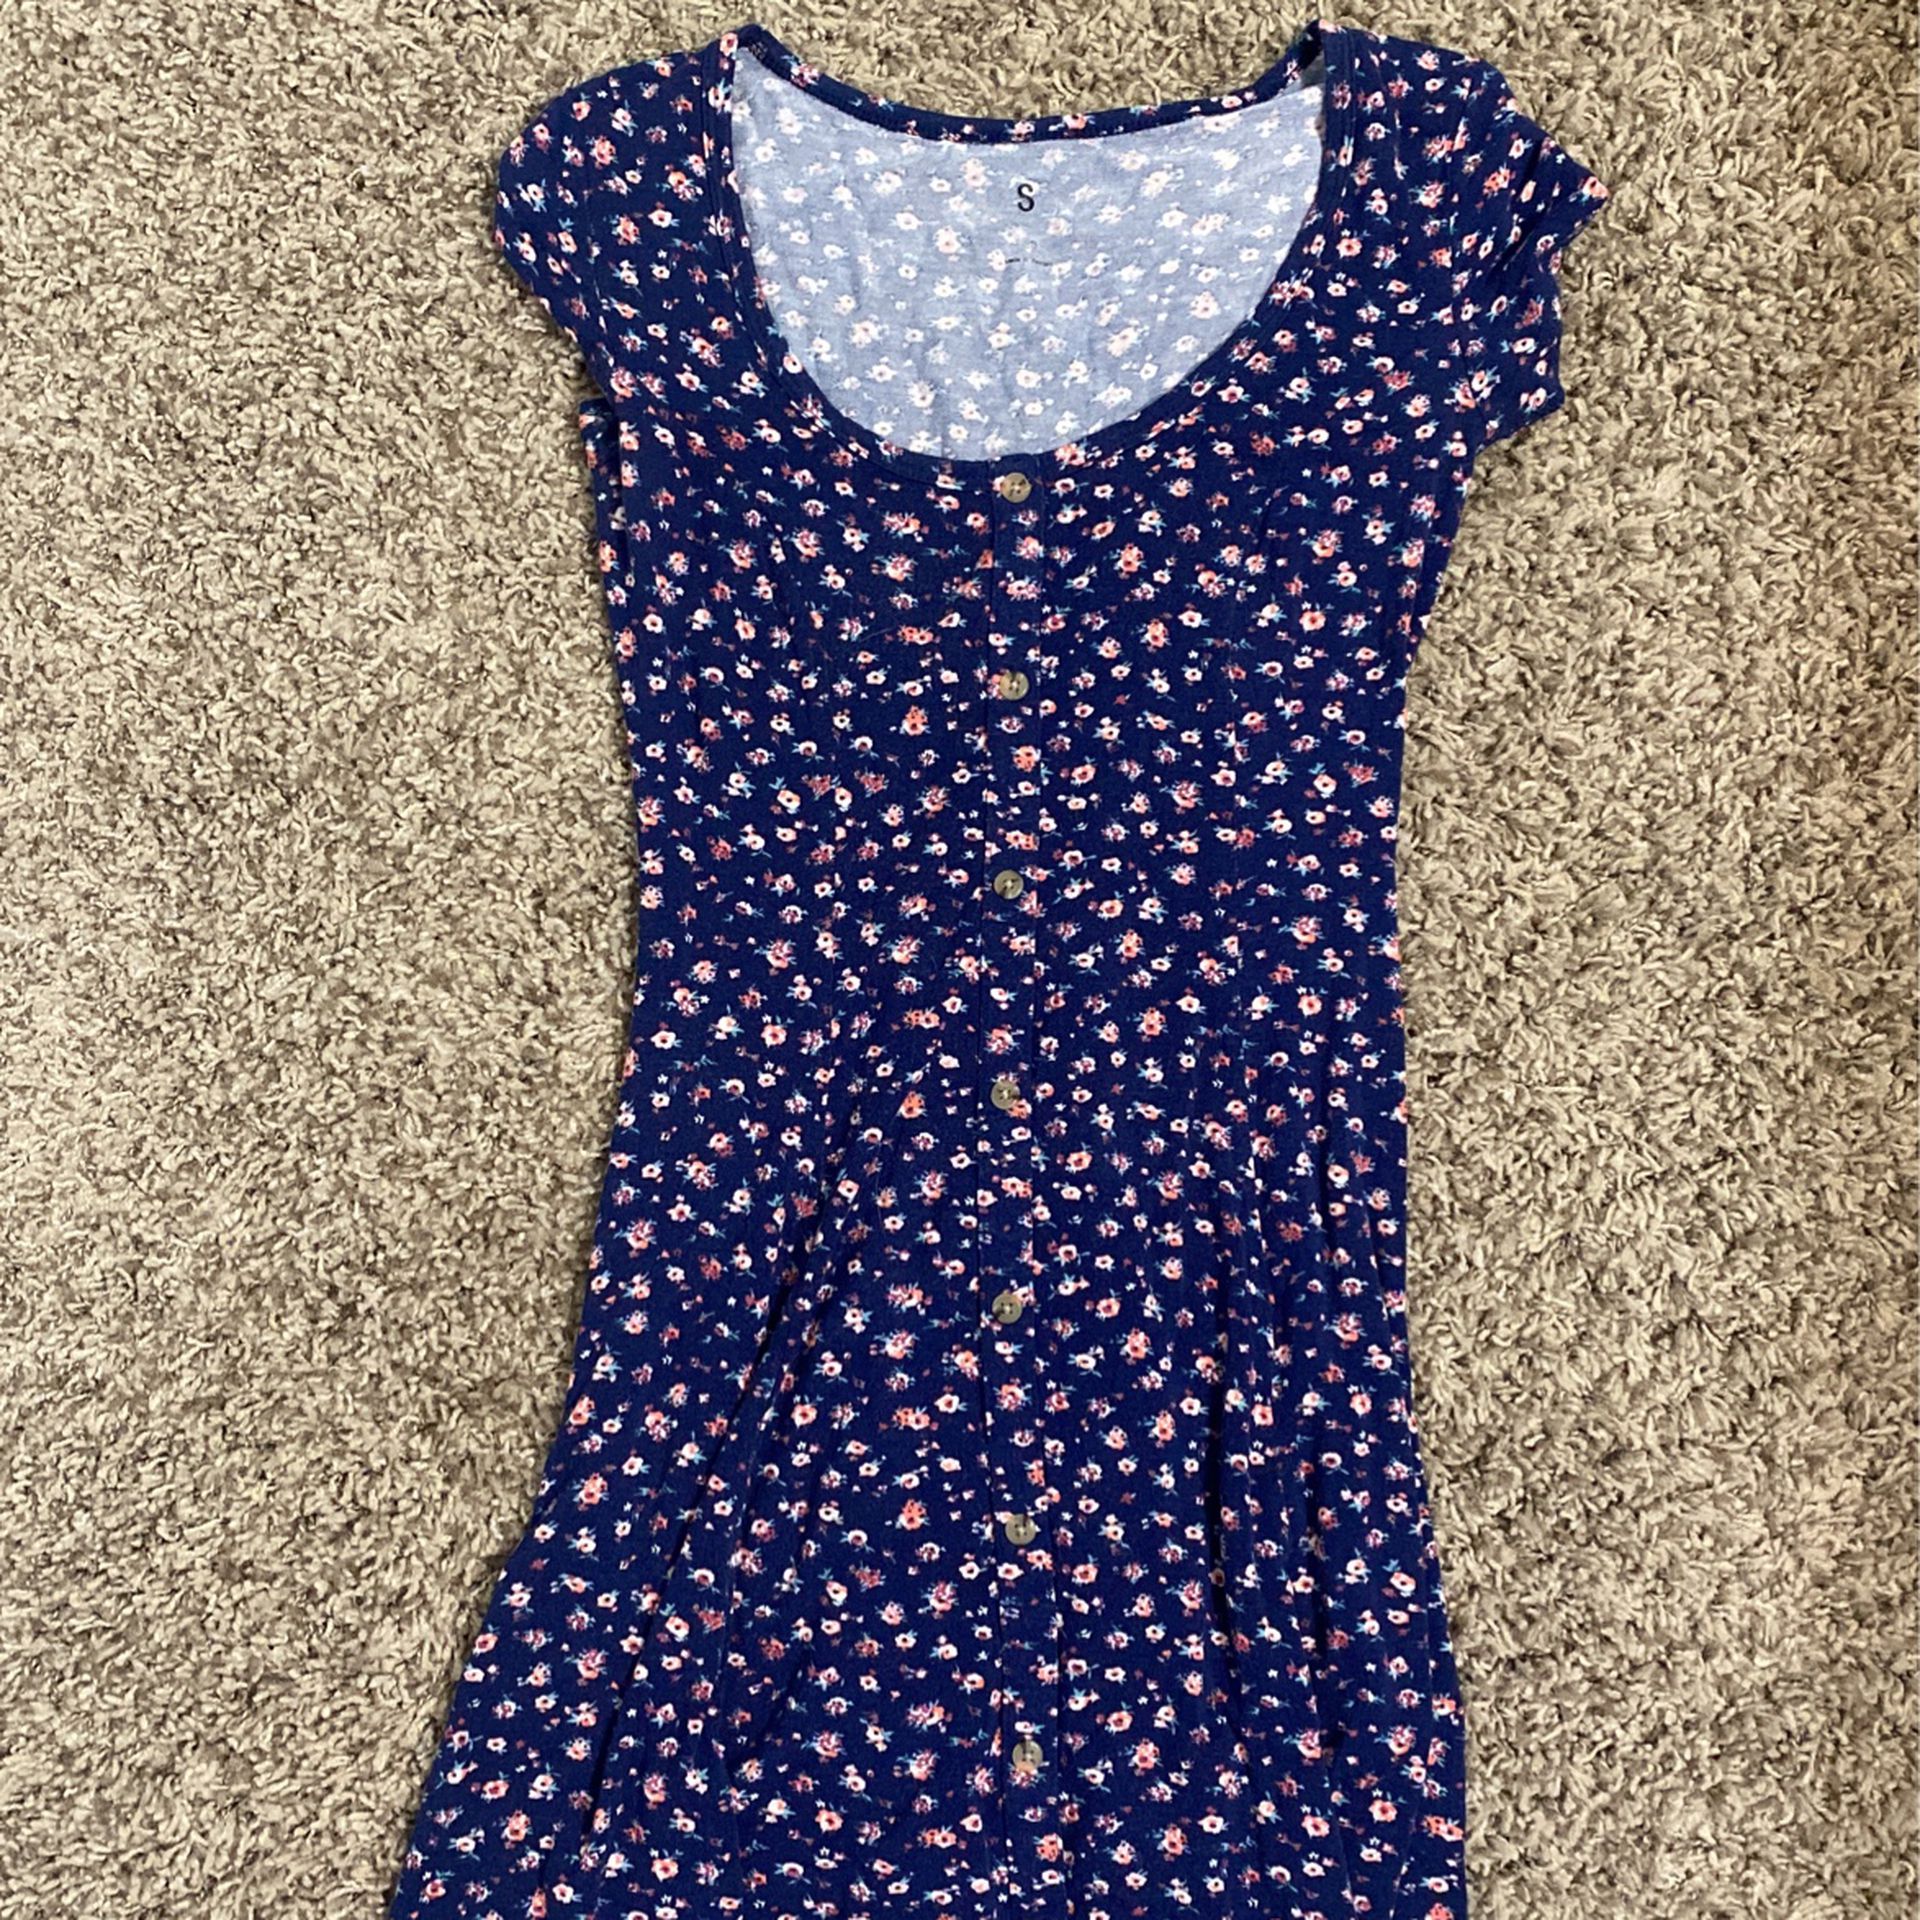 Summer Dress- Size Small